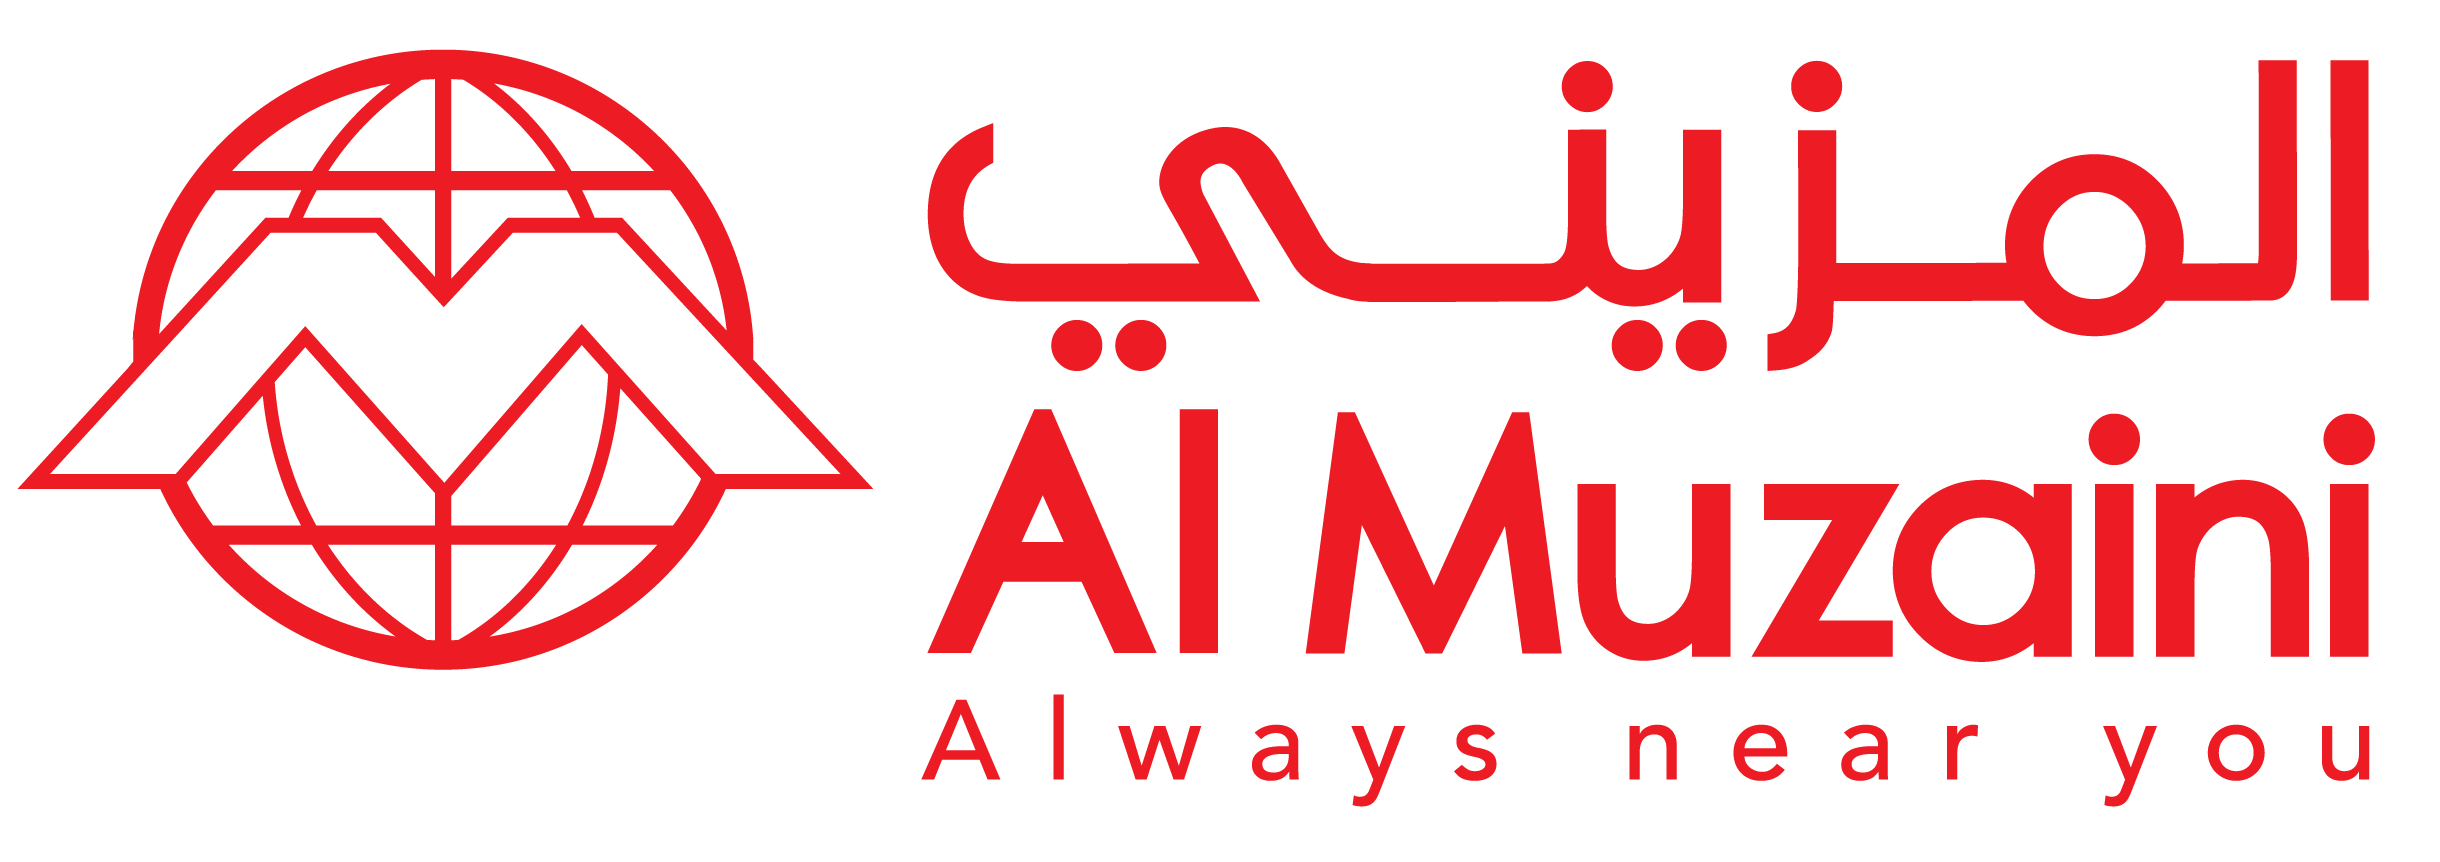 how to find al muzaini near me easily?